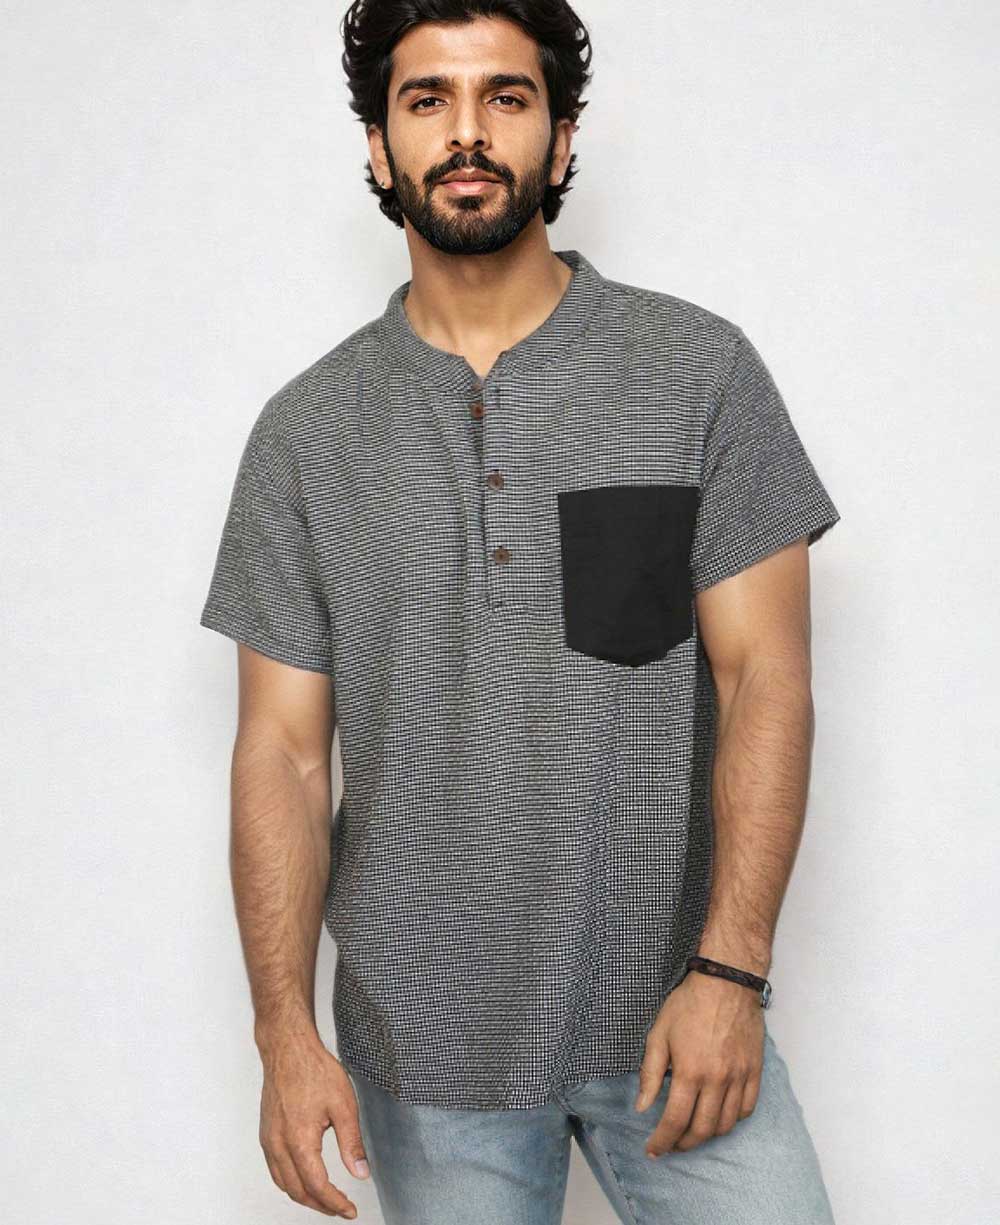 Men's Button Up Kurta Shirt With Solid Pocket - Shirts & Tops Black M